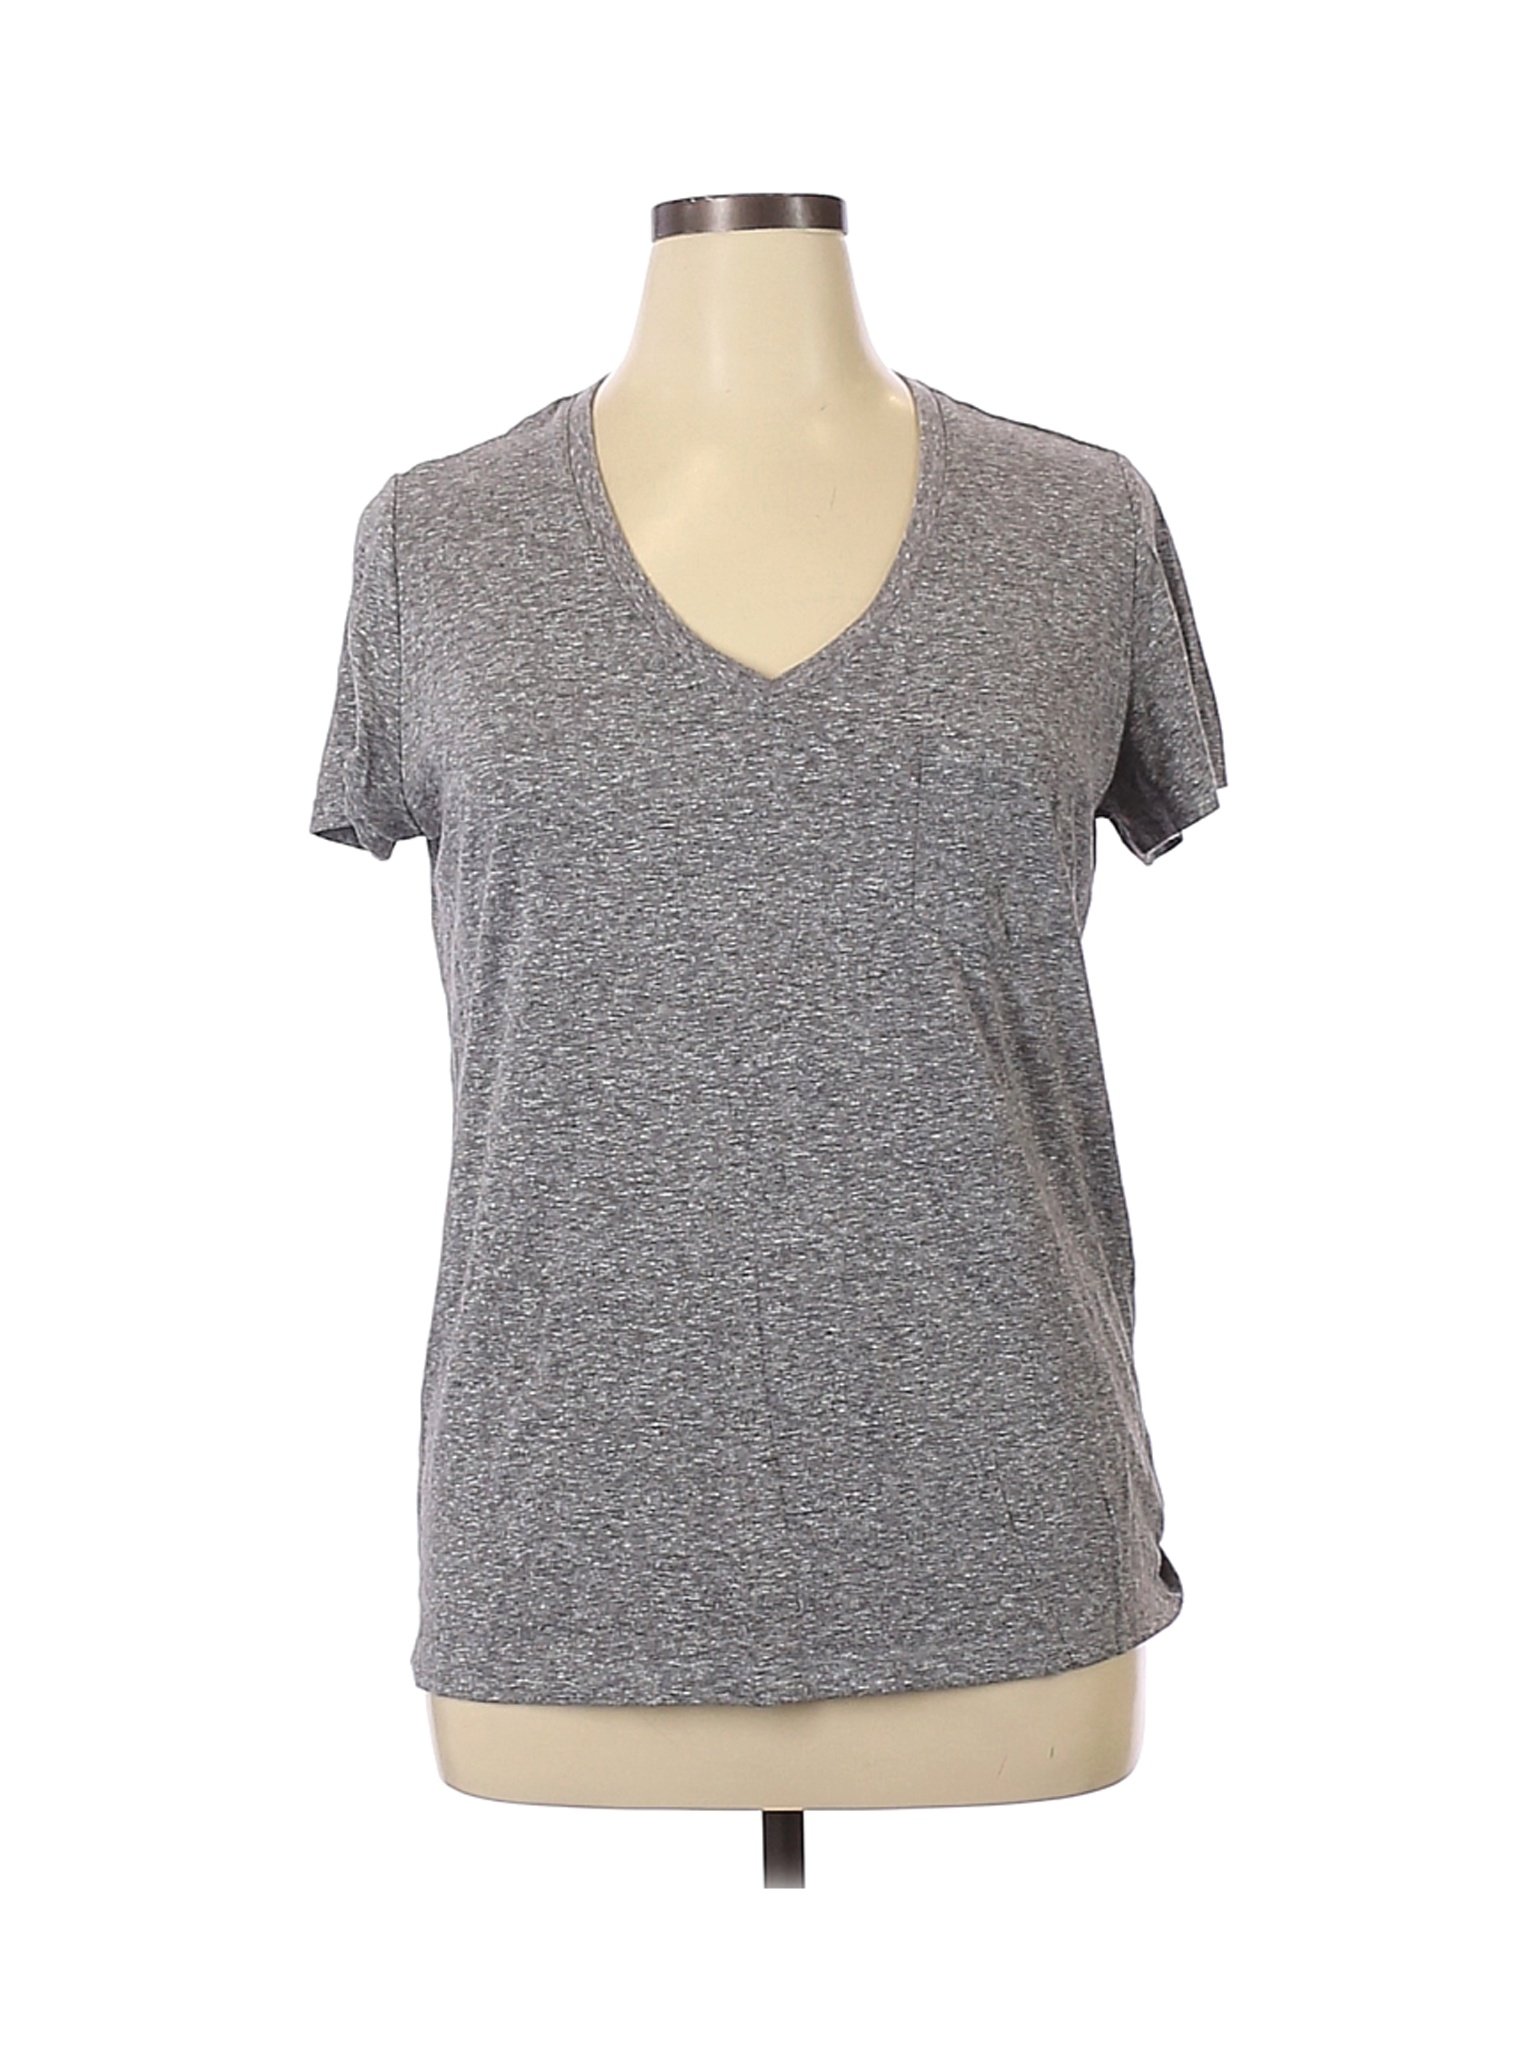 Universal Thread Women Gray Short Sleeve T-Shirt XL | eBay